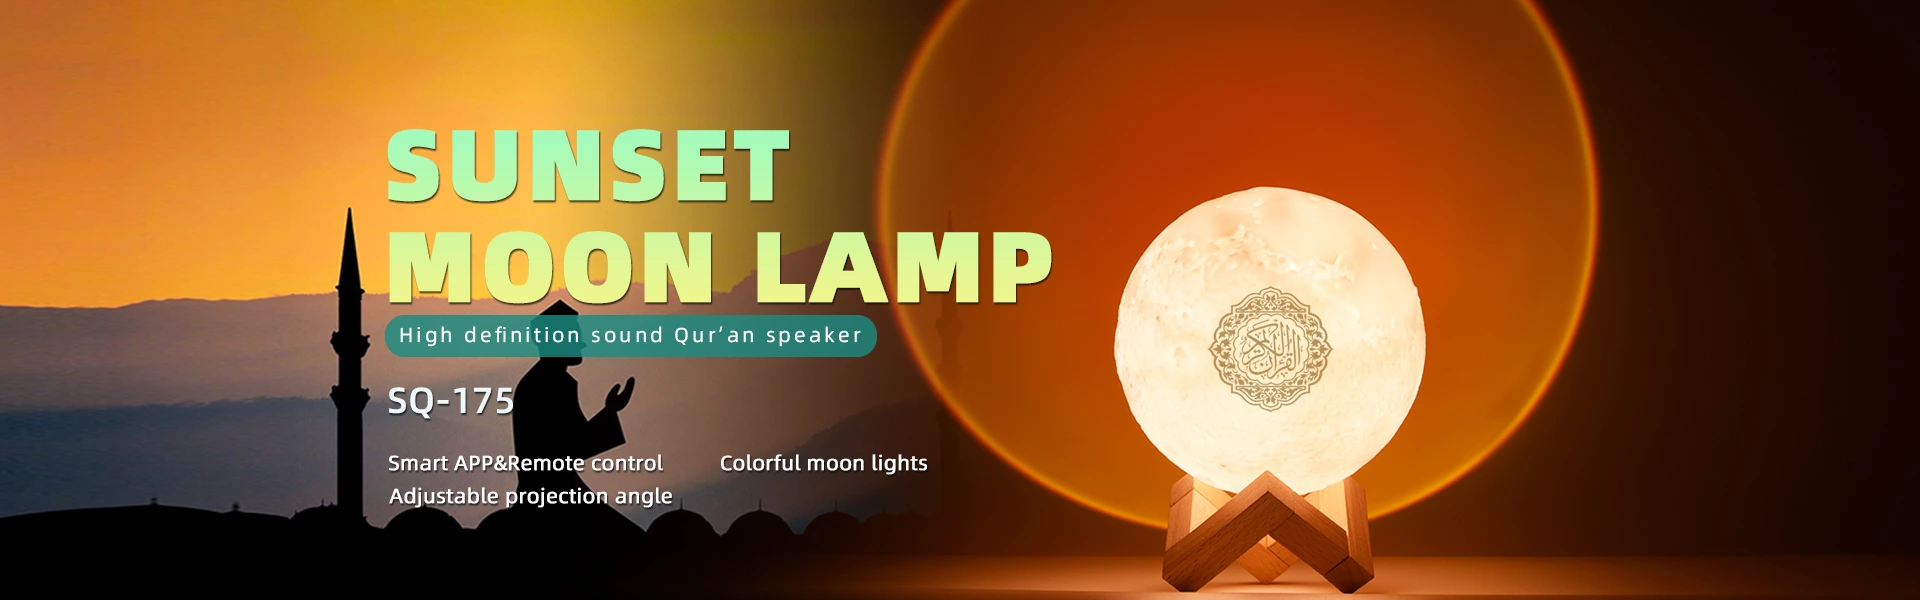 Sunset Moon Lamp Quran Speaker